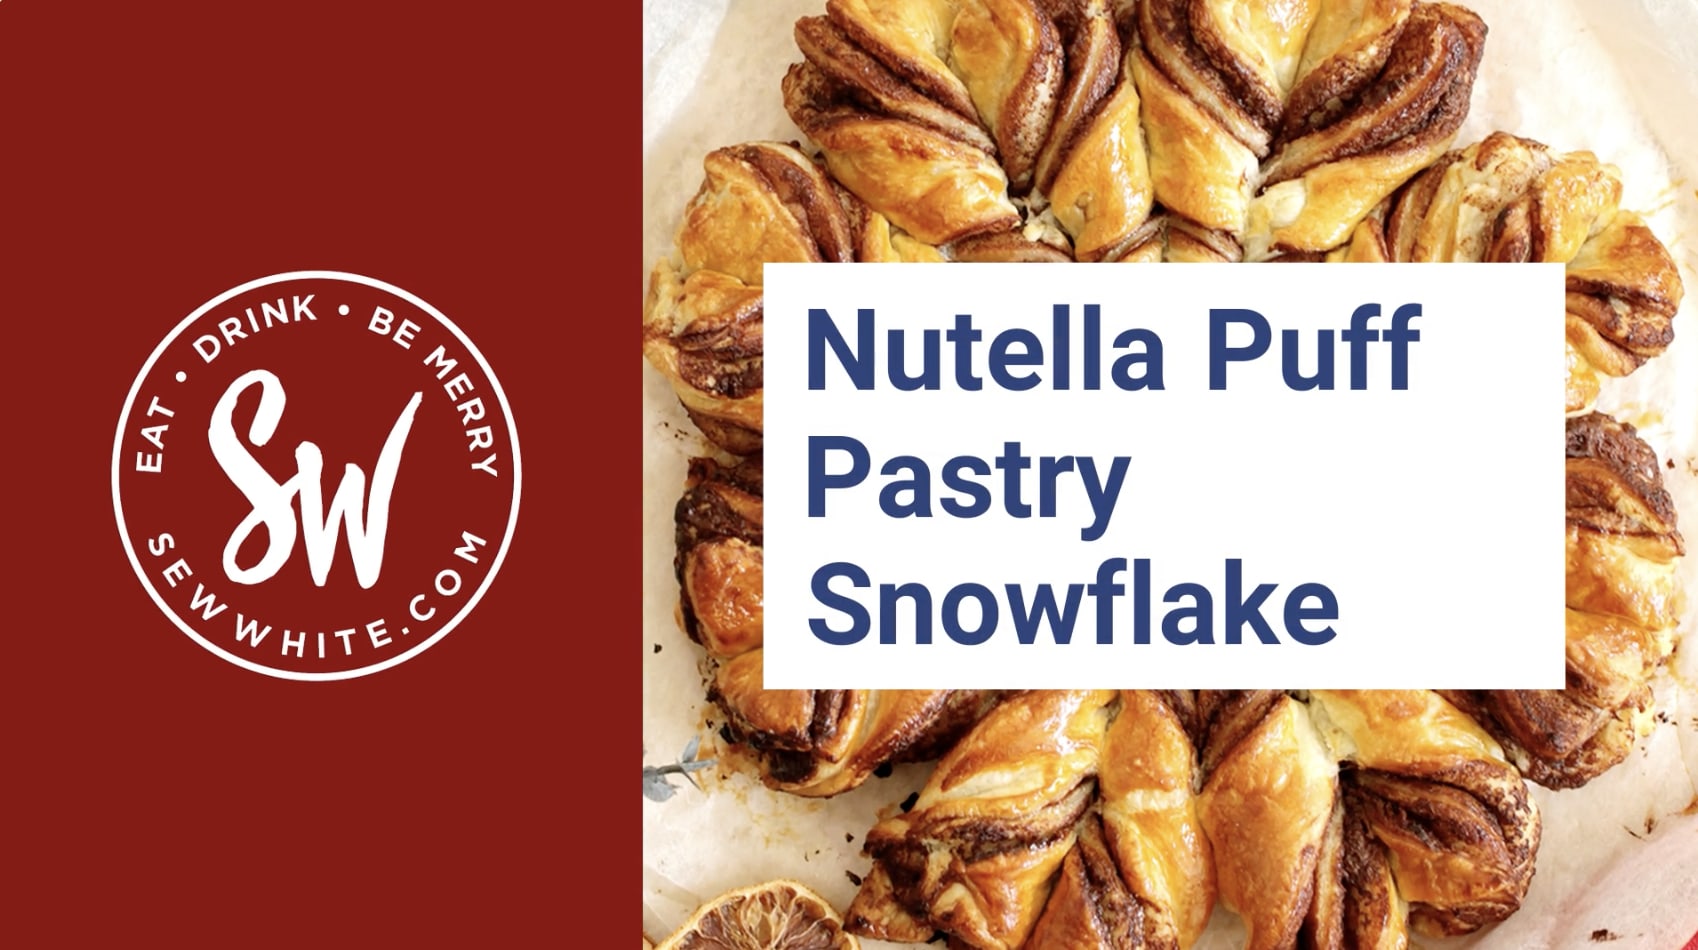 Nutella Puff Pastry Snowflake - Sew White